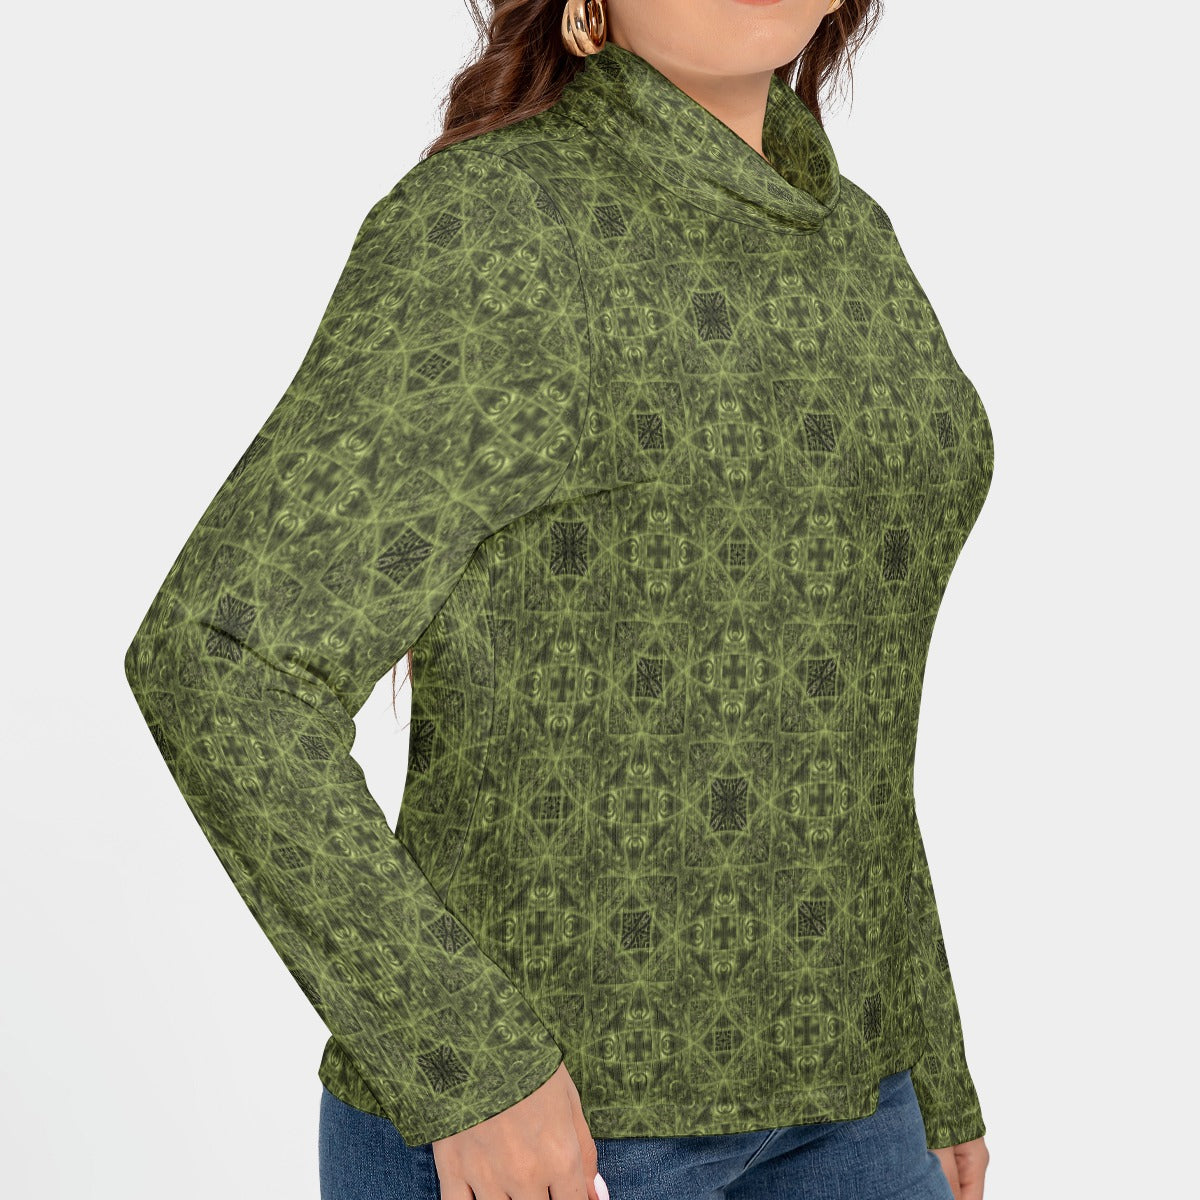 Plus Size Long Sleeve Turtleneck Shirt for Women - Elegant Comfort by Veronica Suarez Art